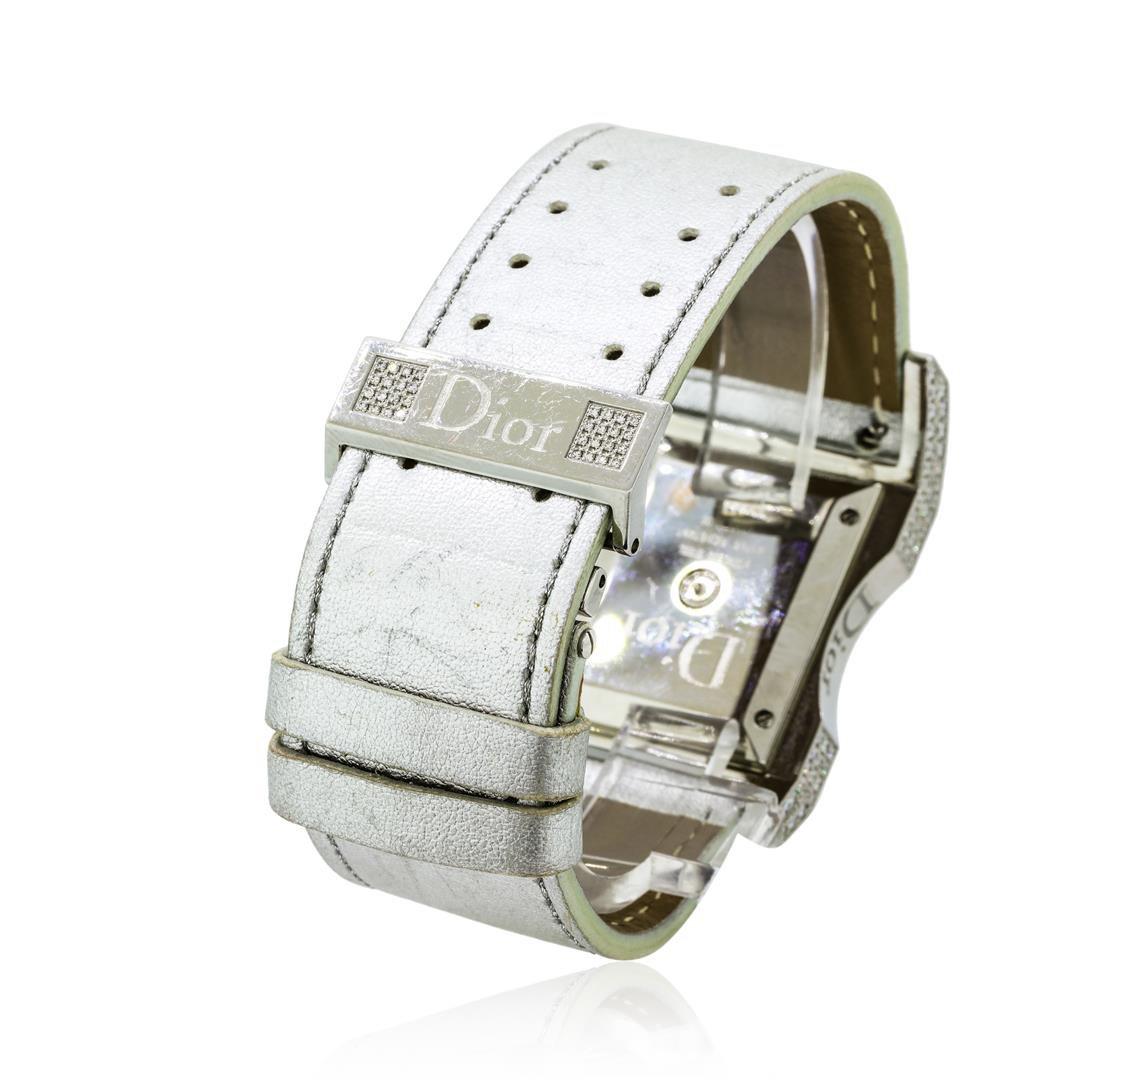 Christian Dior Diamond Wristwatch - Stainless Steel